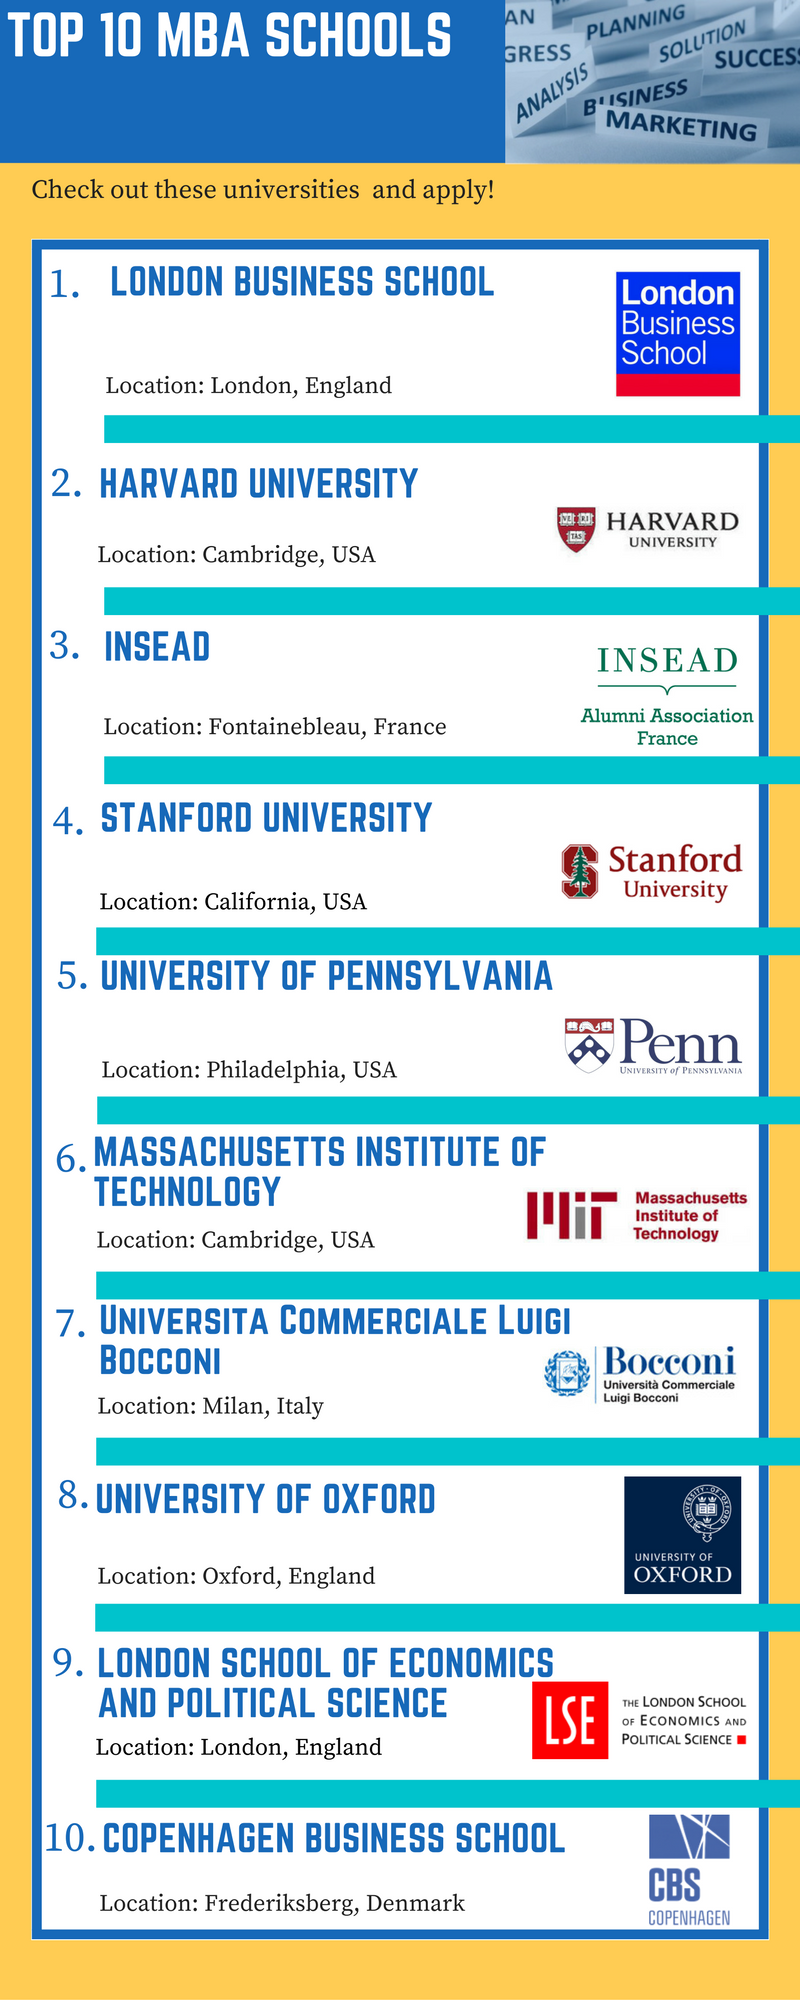 Top 10 MBA schools